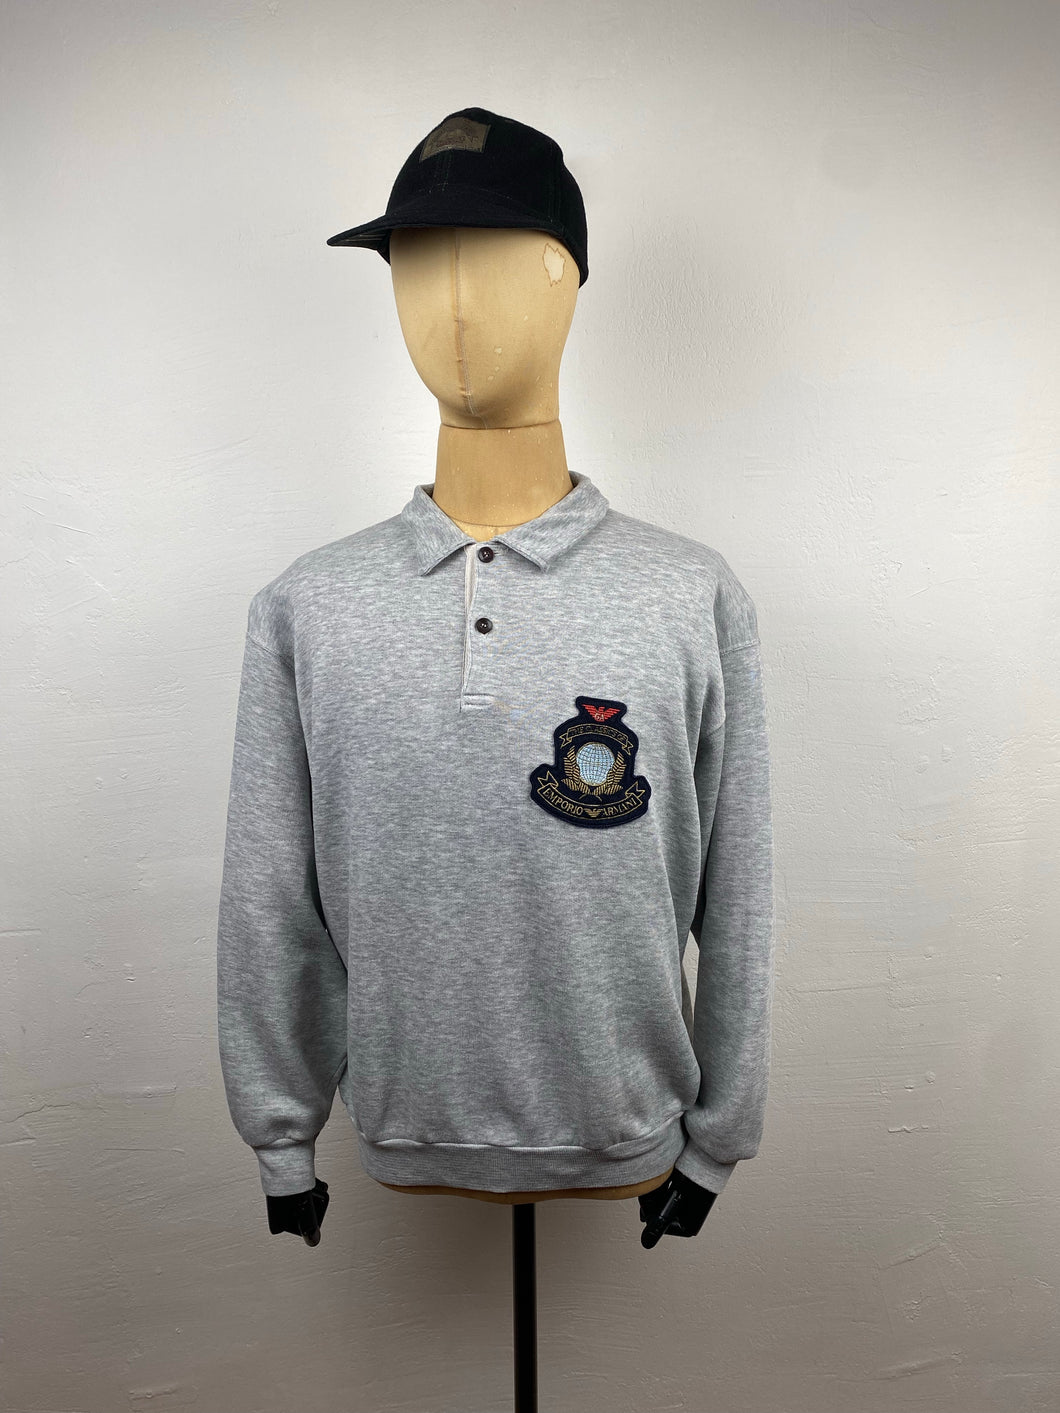 1980s EA polo sweater gray